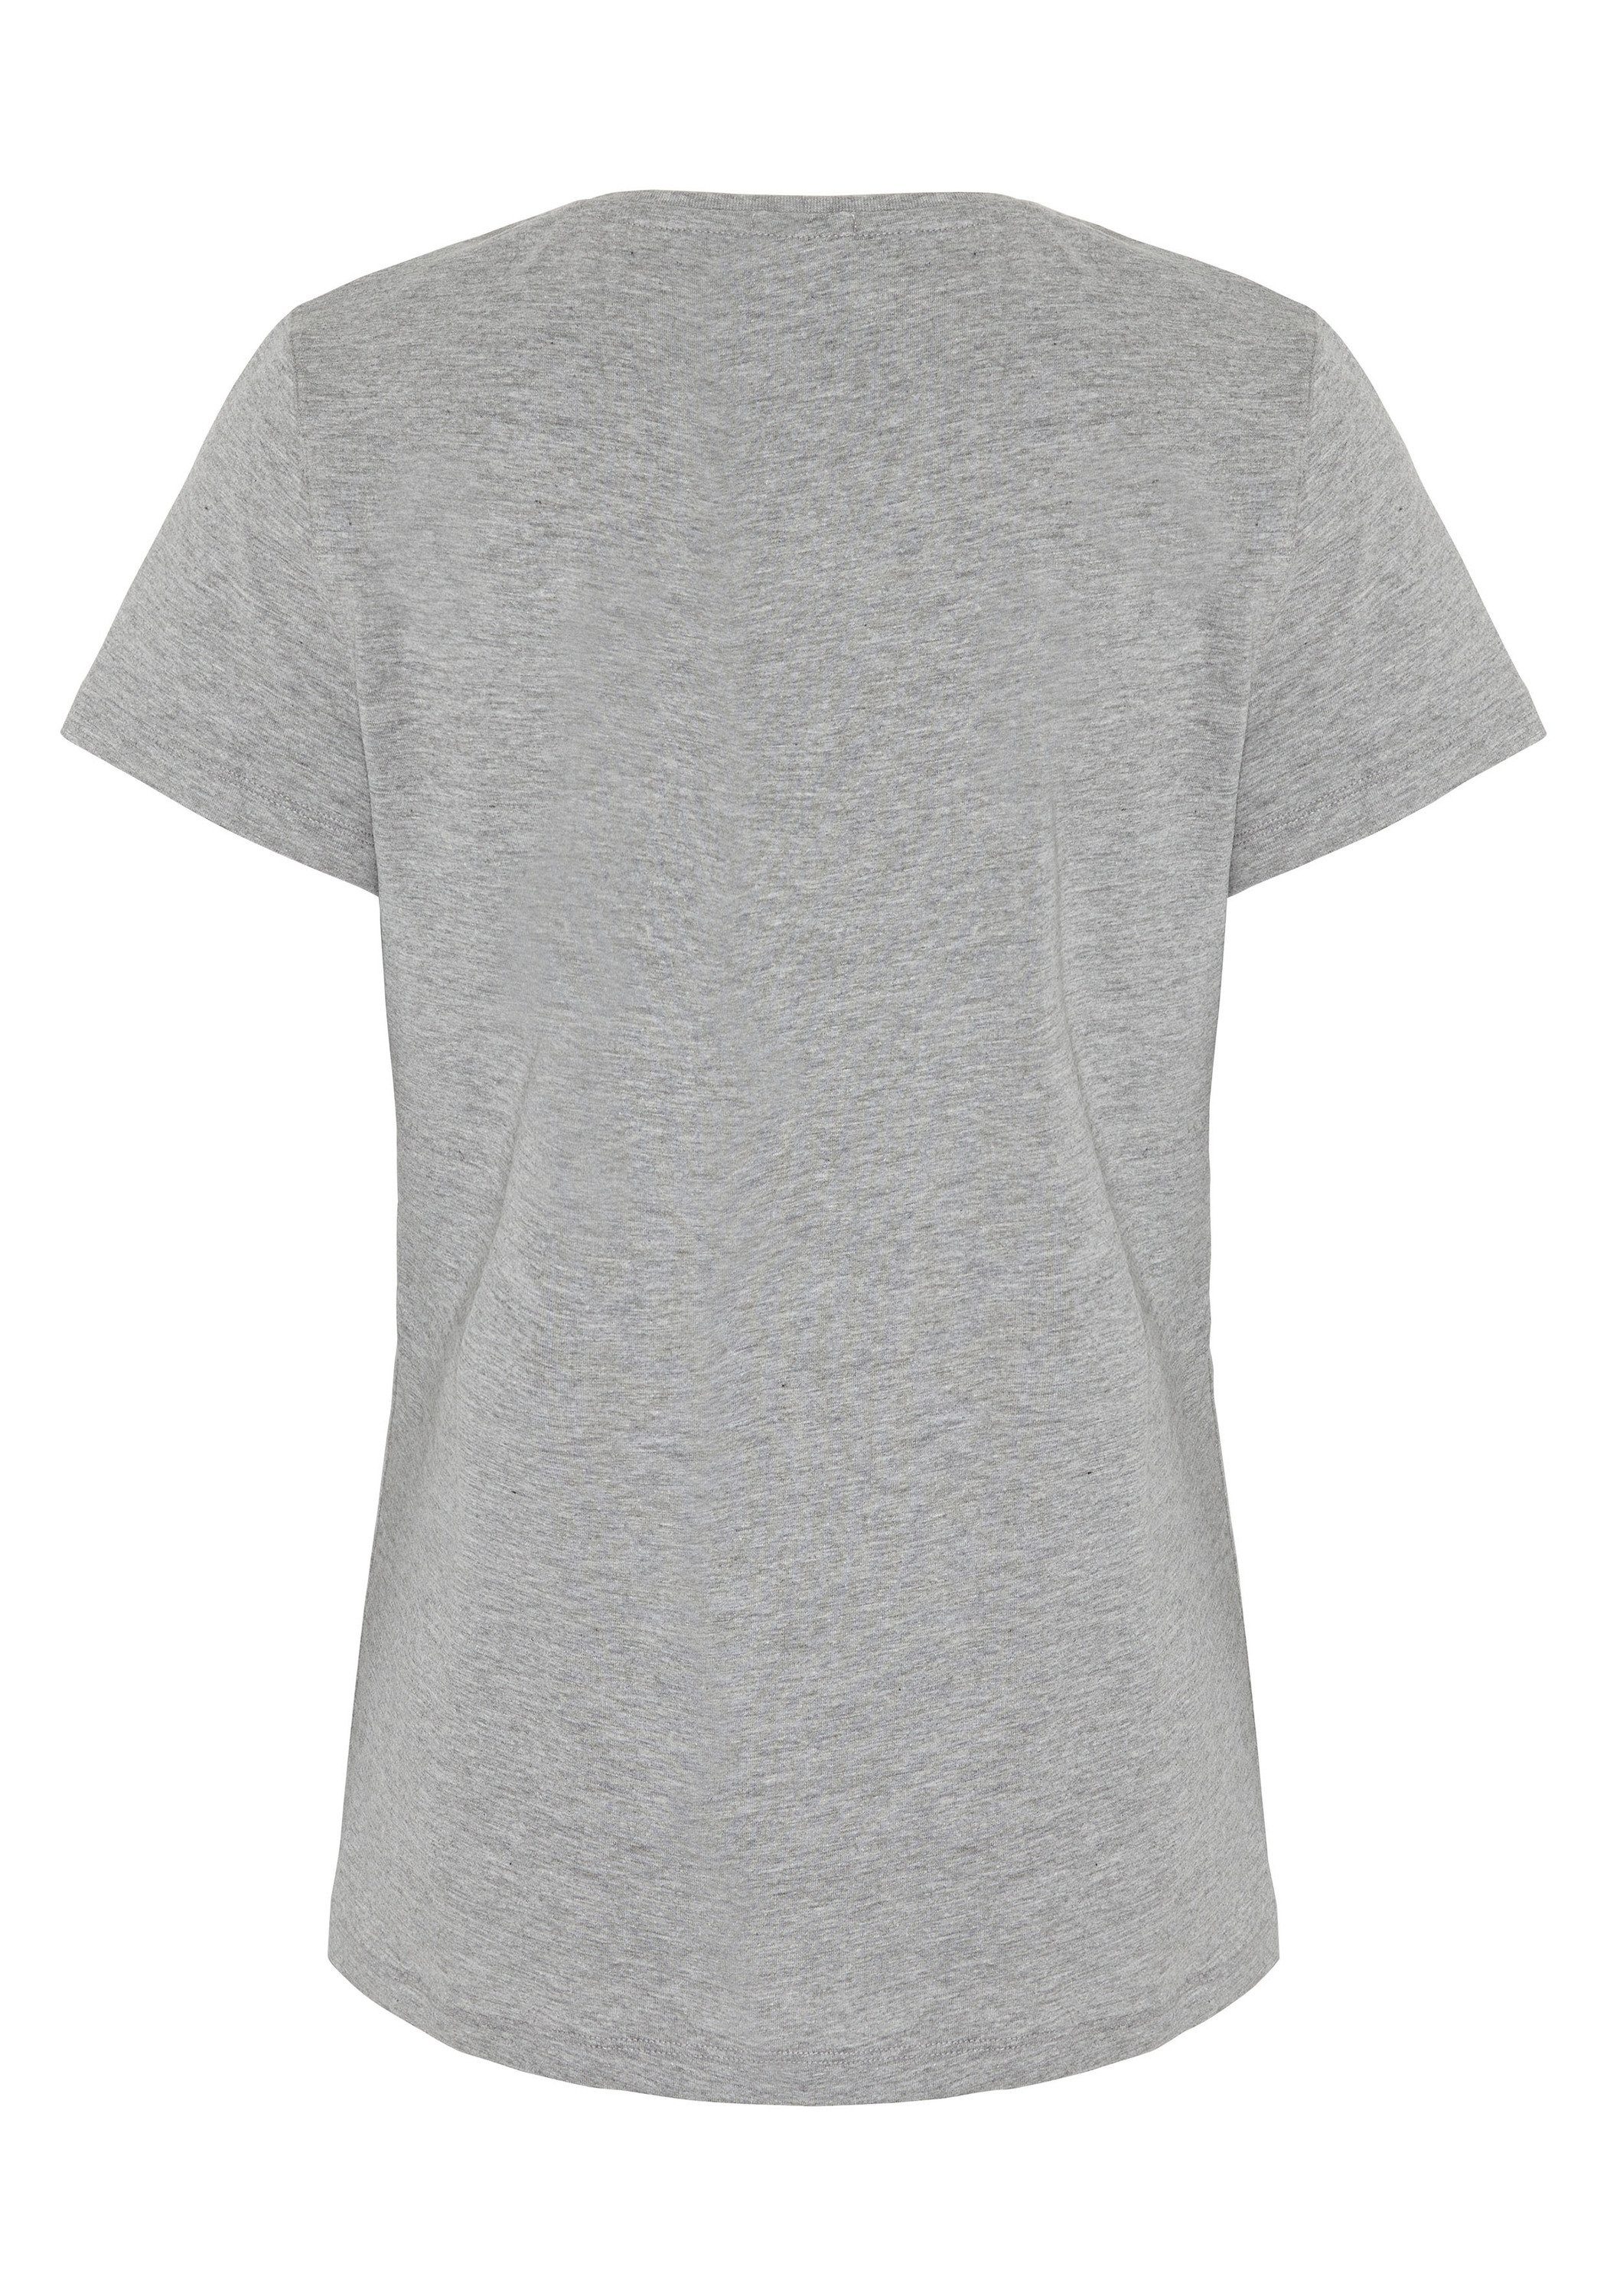 Chiemsee Print-Shirt T-Shirt mit Grey/Pink 1 farbenfrohem Frontprint Medium